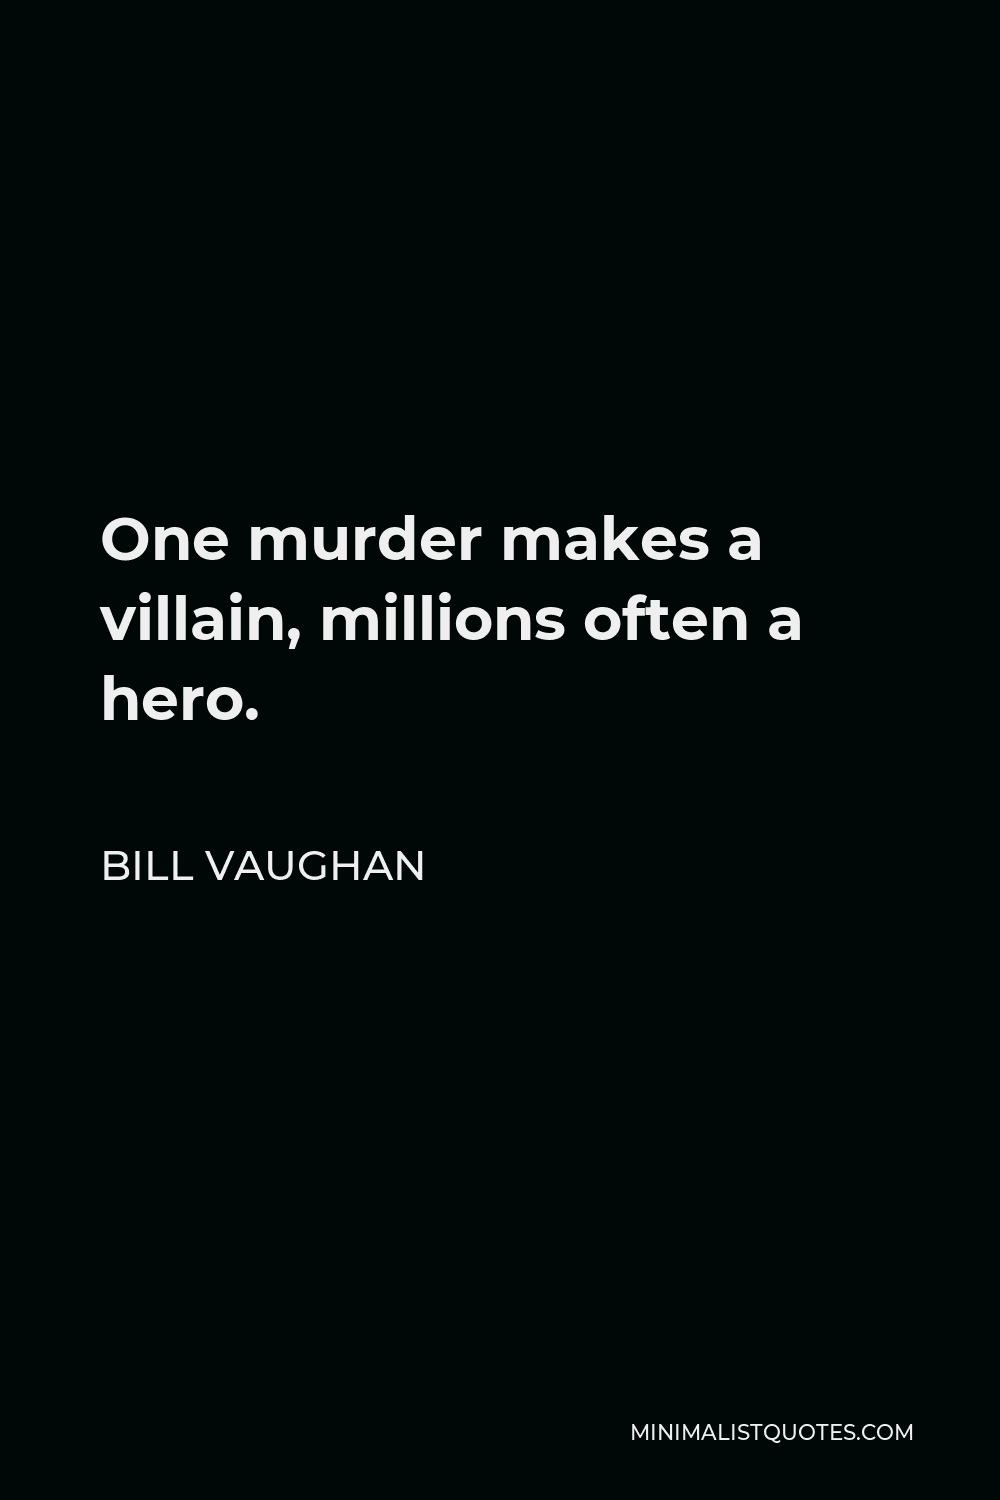 Bill Vaughan Quote - One murder makes a villain, millions often a hero.